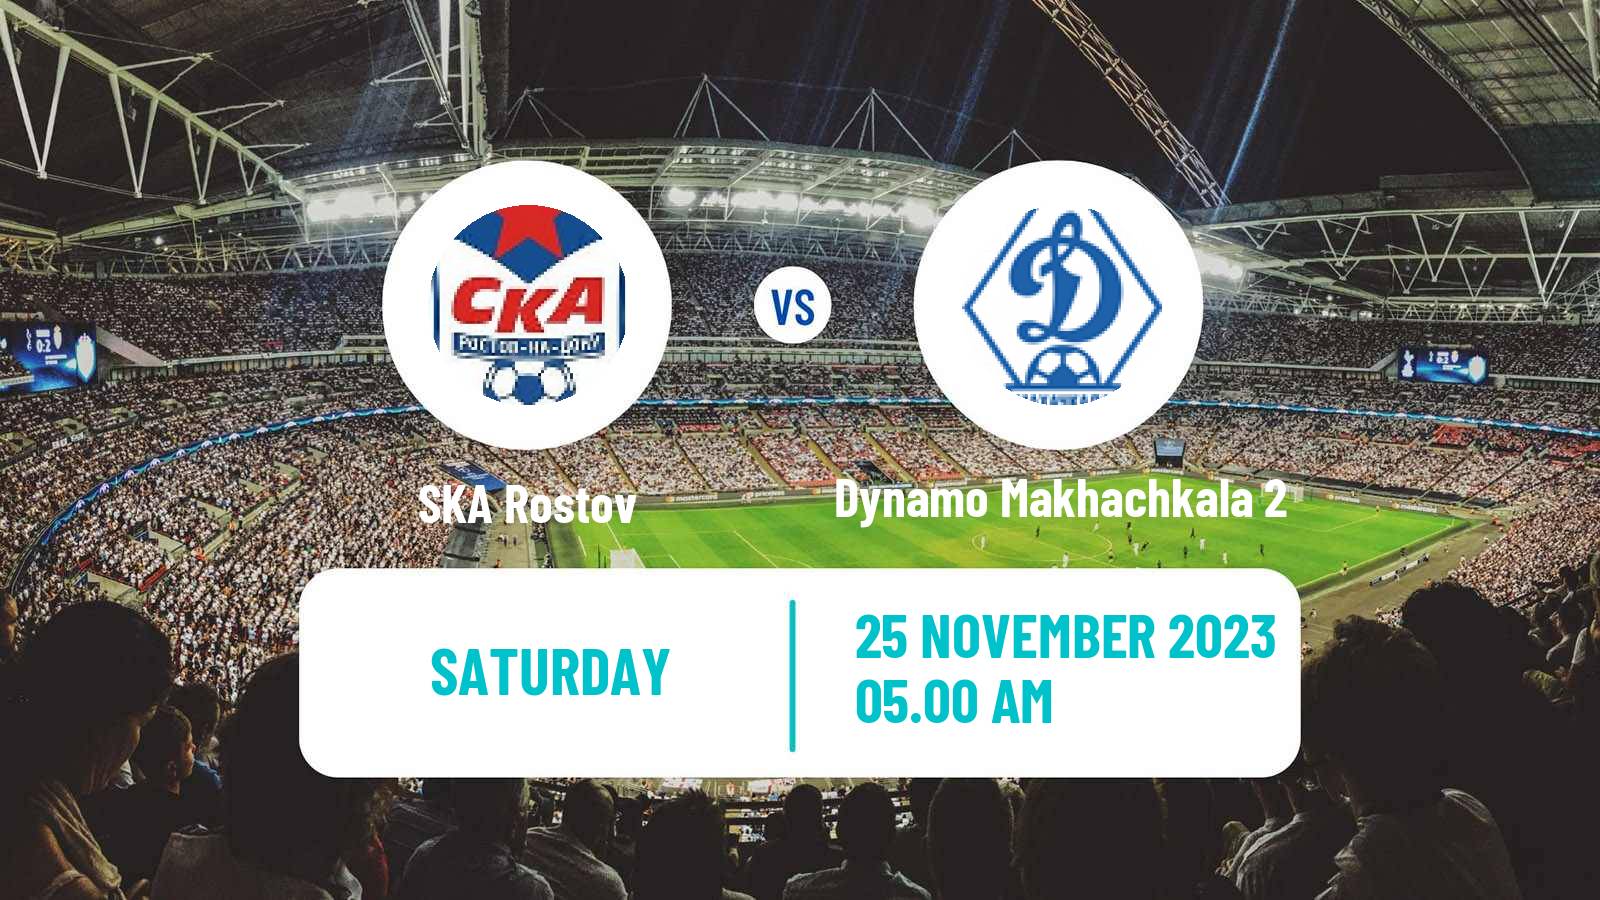 Soccer FNL 2 Division B Group 1 SKA Rostov - Dynamo Makhachkala 2